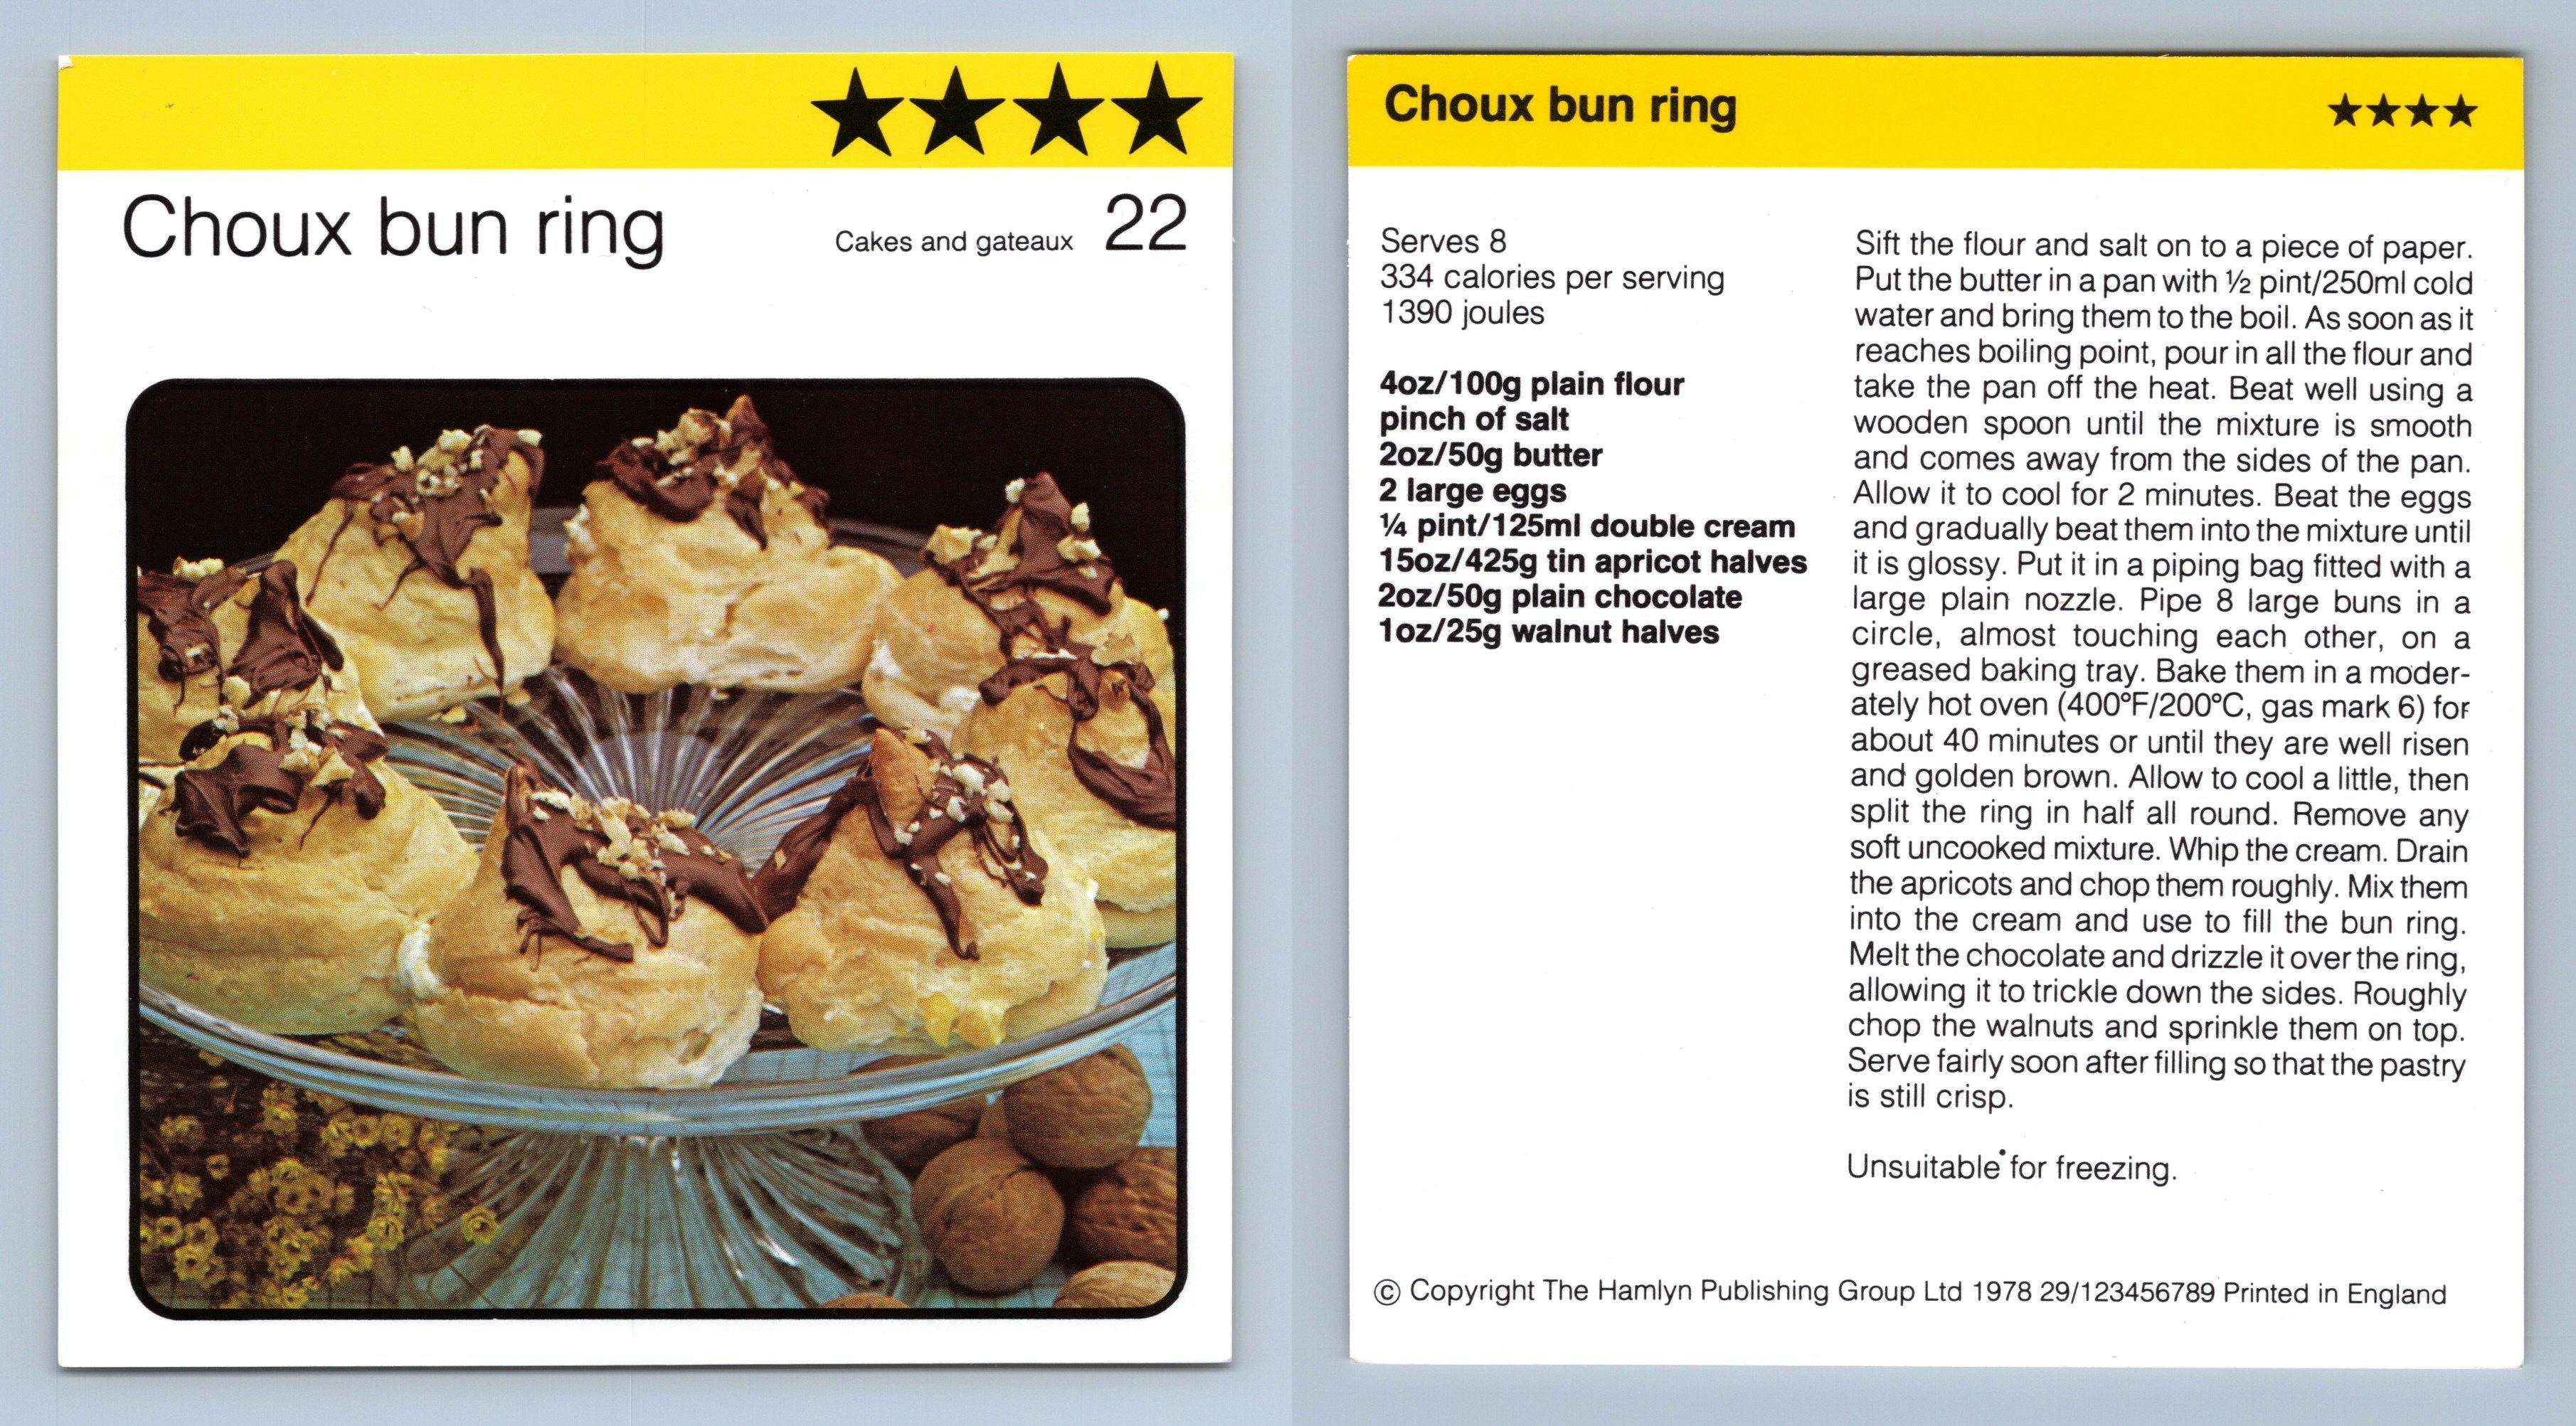 Choux Bun Ring #22 Cakes Kathie Webbers Cookery 1977-8 Recipe Card - Photo 1/1